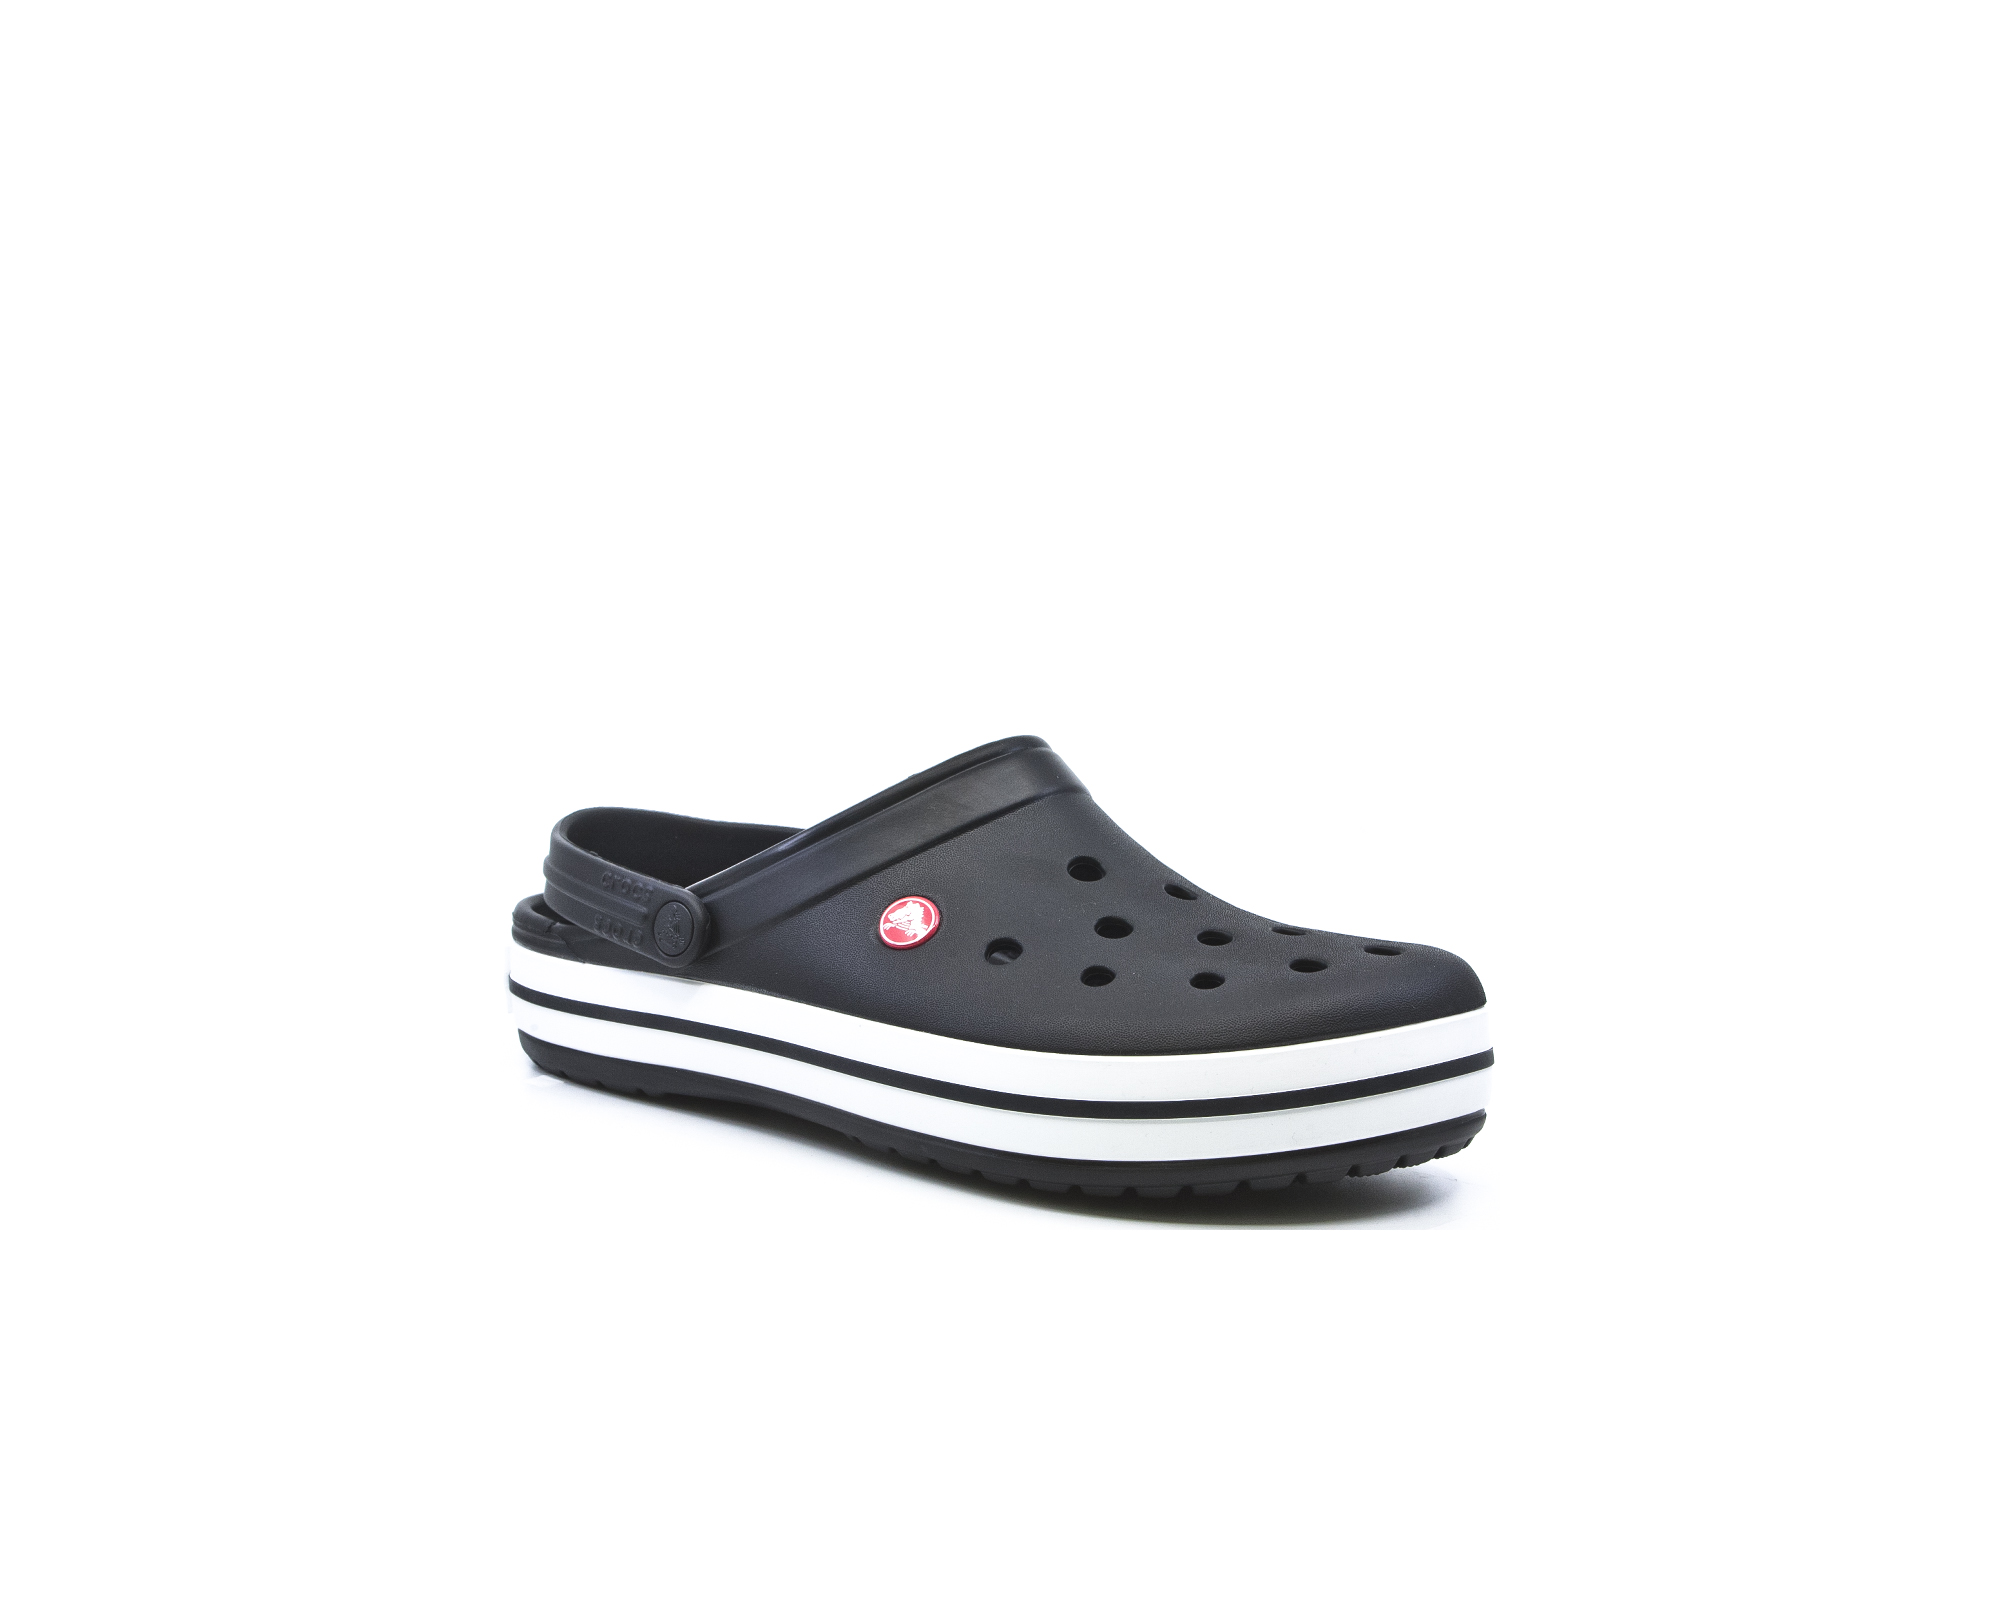 Crocs Clog Crocband Black Ανατομικά Σαμπό Μαύρο (11016-001) - LifeShoes.gr